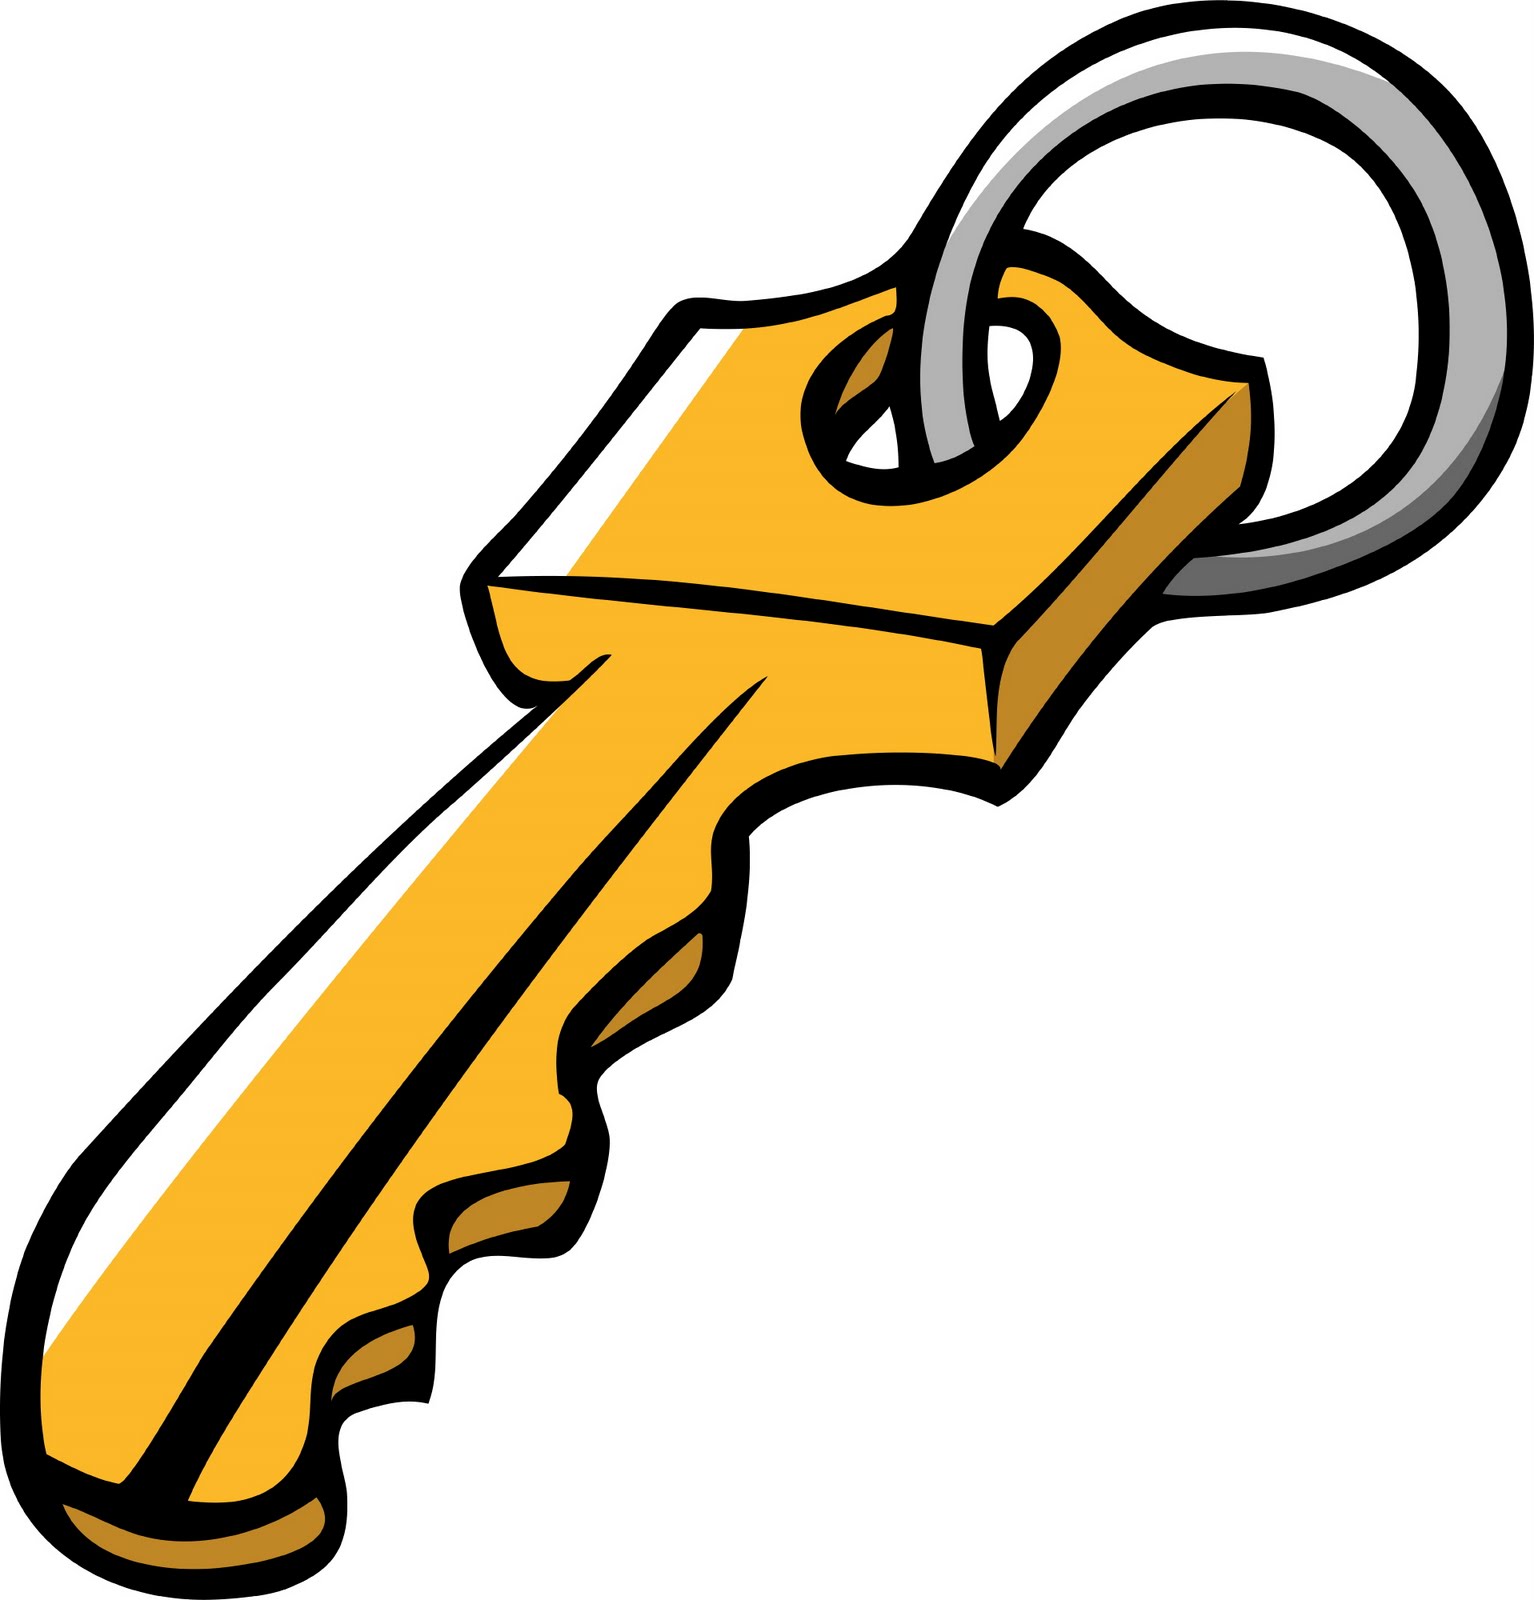 Clipart of keys